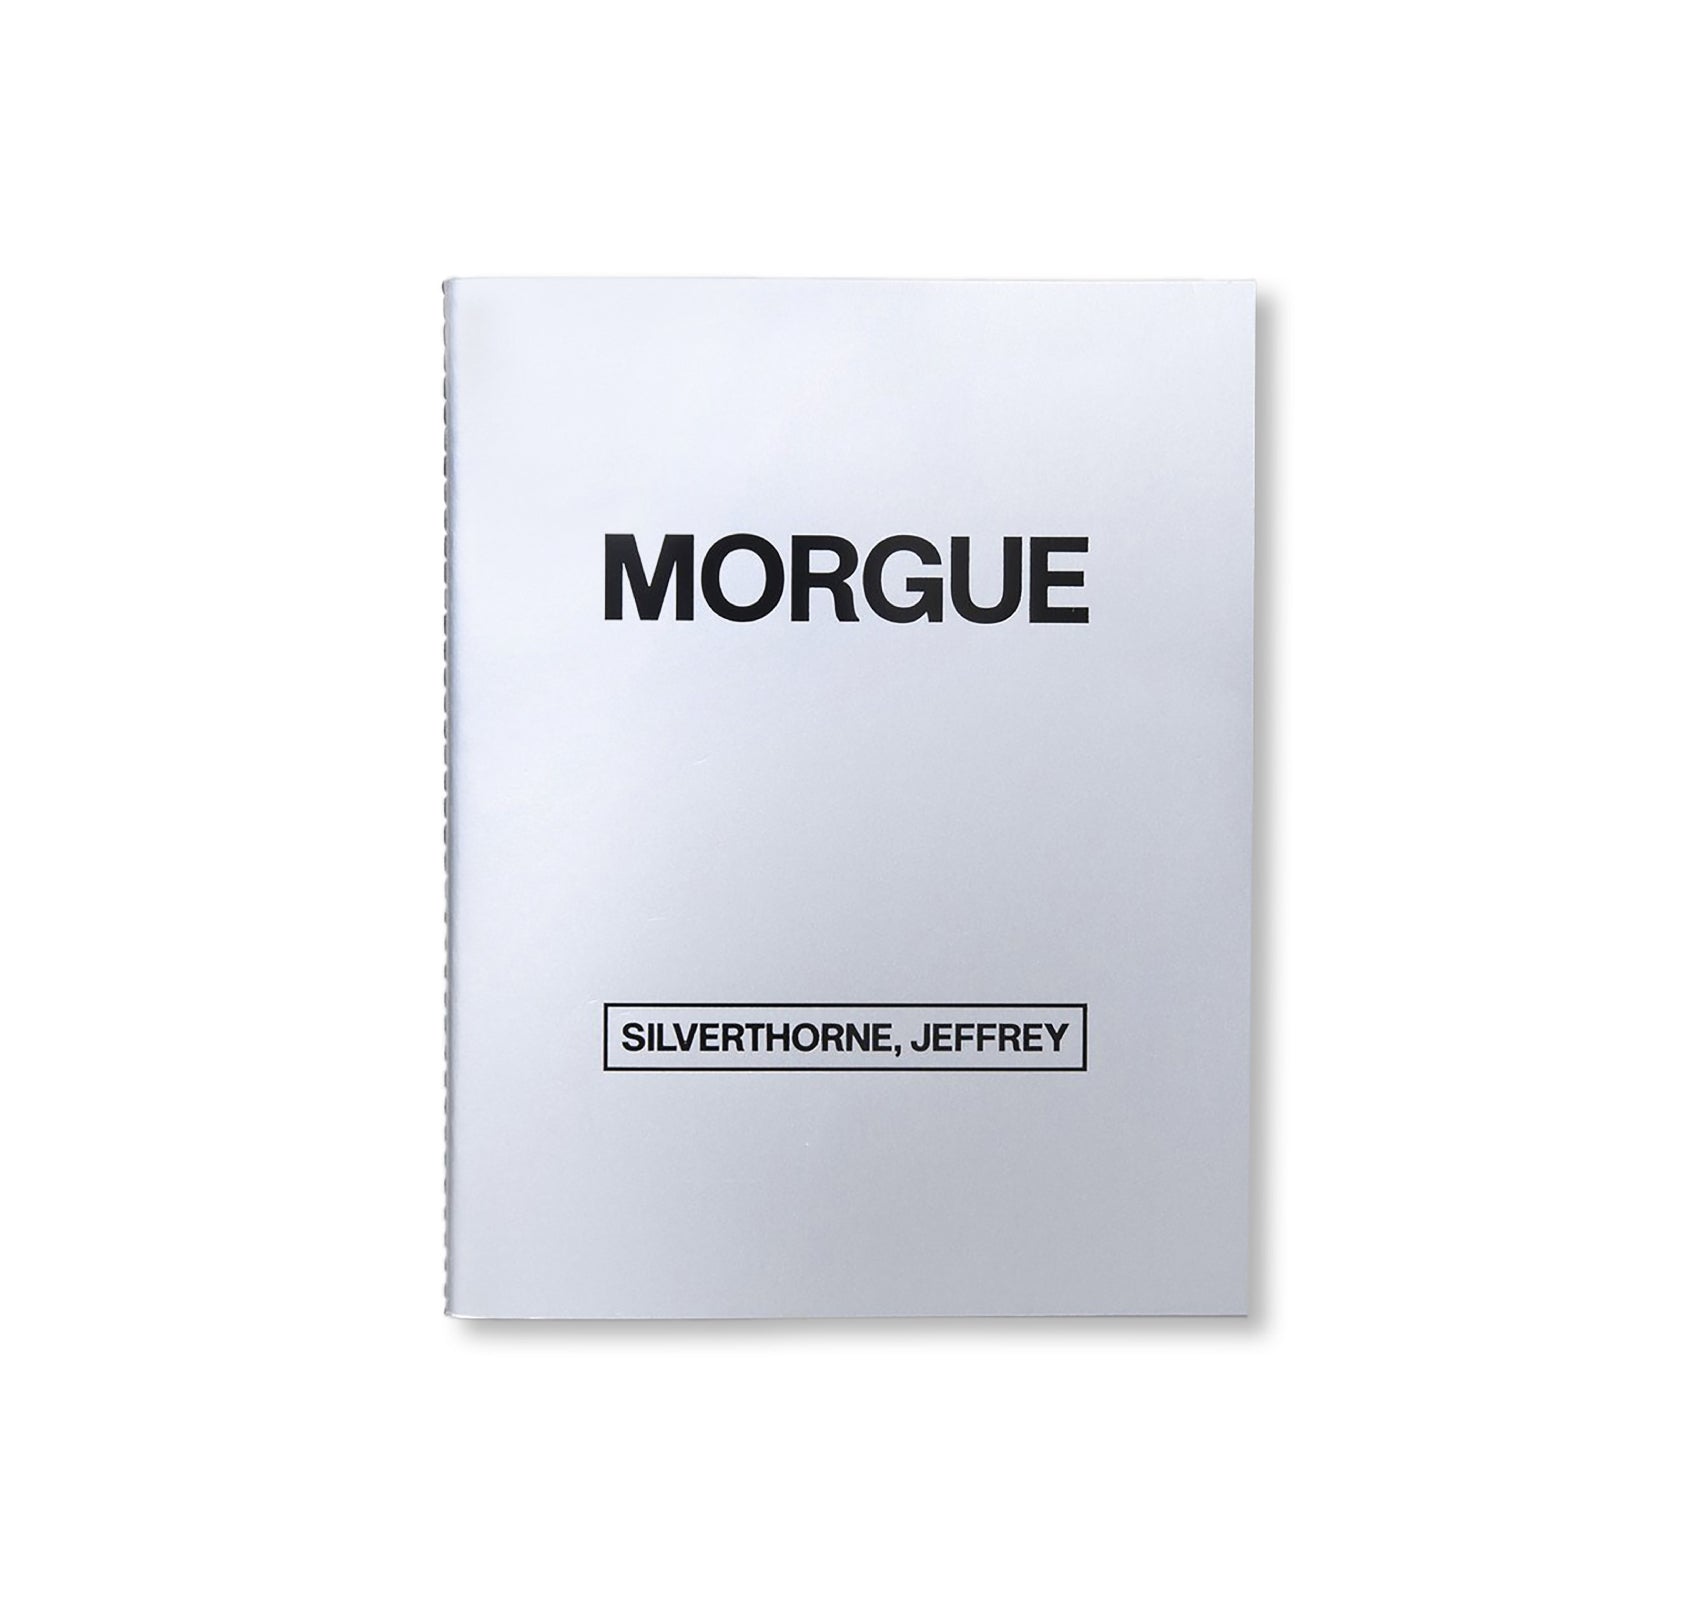 MORGUE by Jeffrey Silverthorne